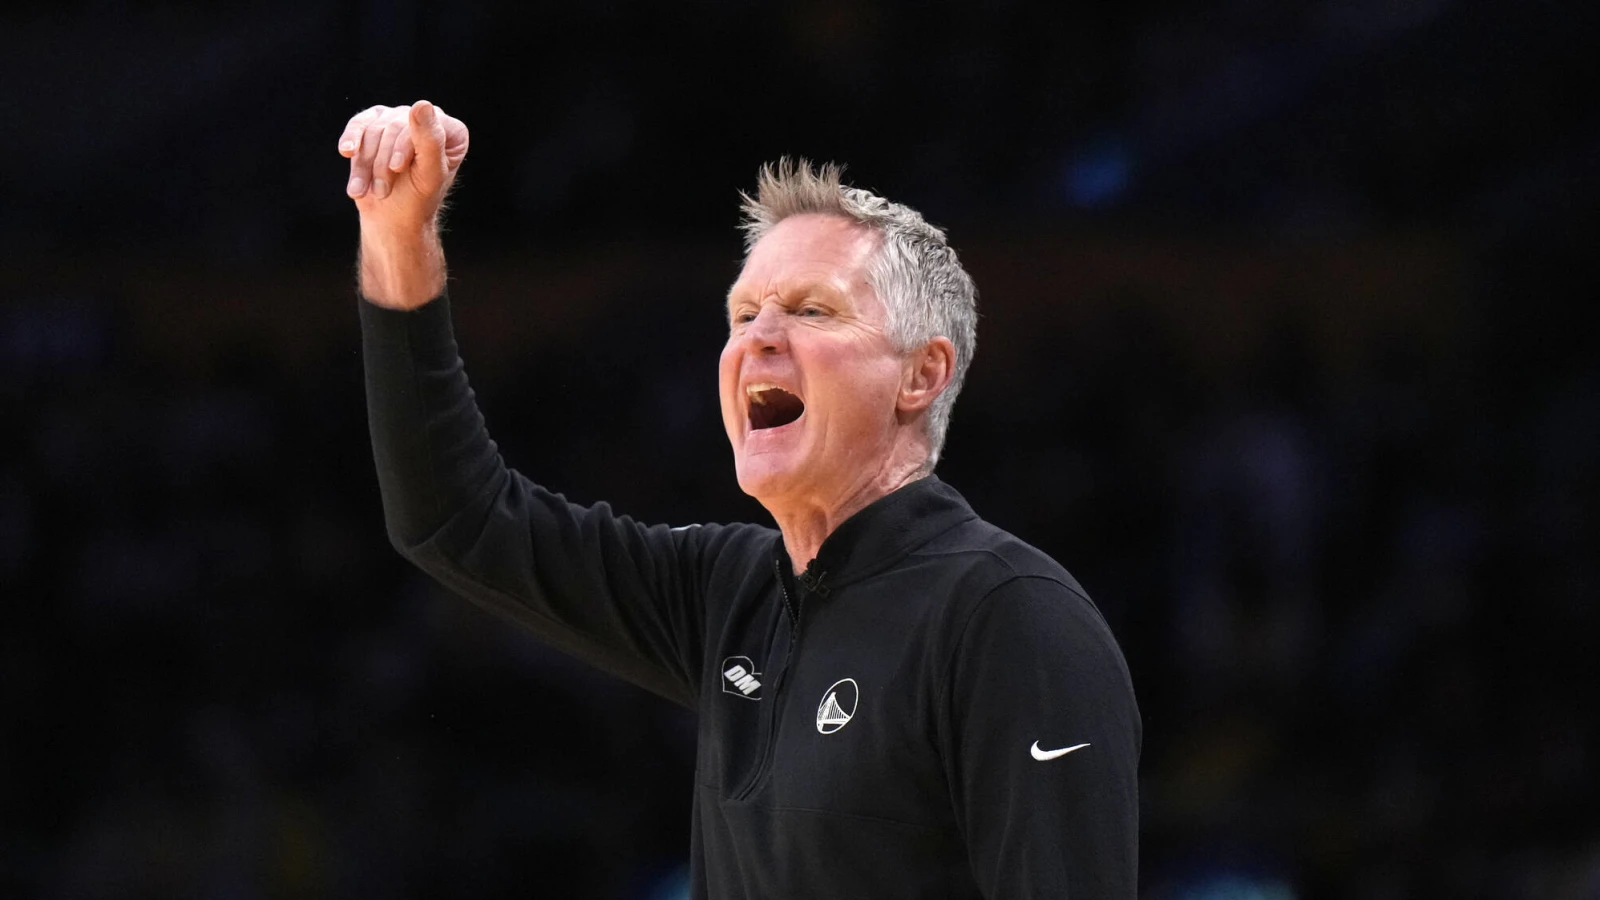 Warriors’ Steve Kerr receives harsh criticism from NBA analyst